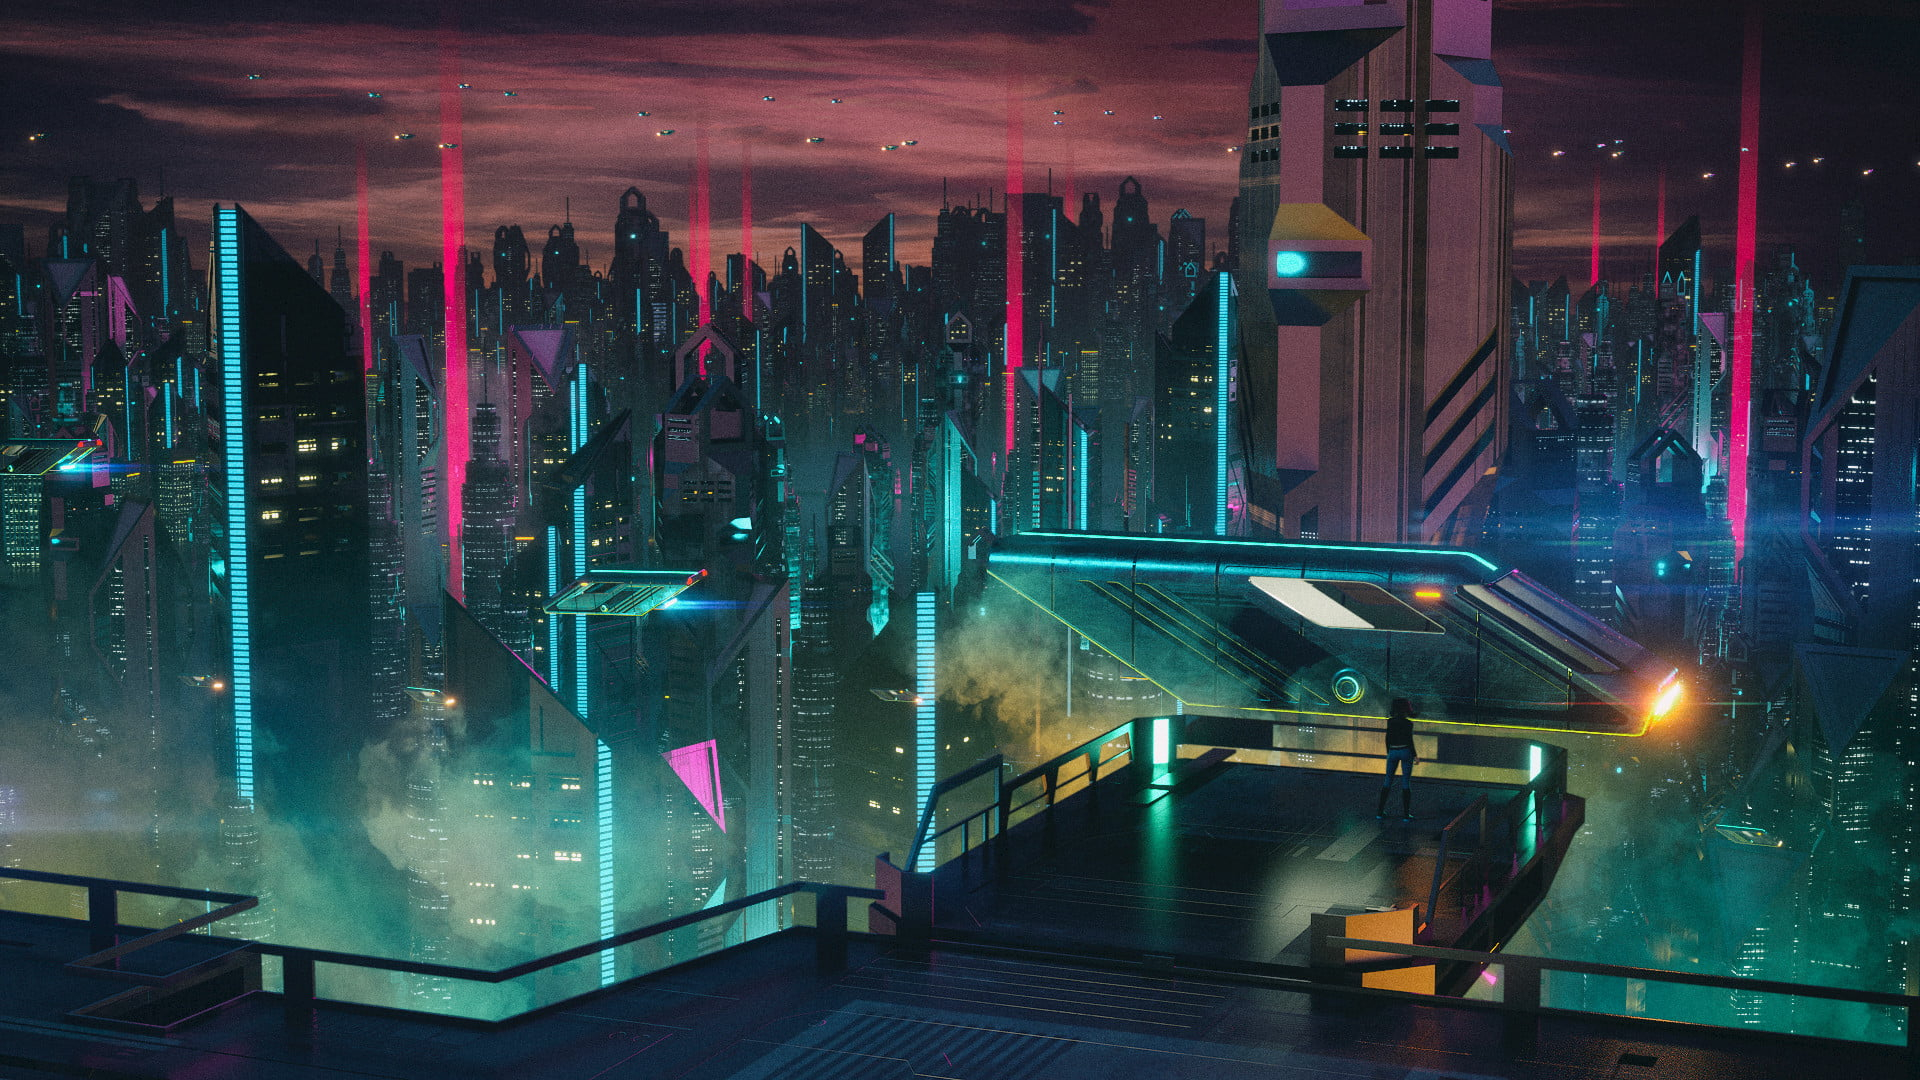 Futuristic city illustration wallpaper aniamted city skyline science fiction